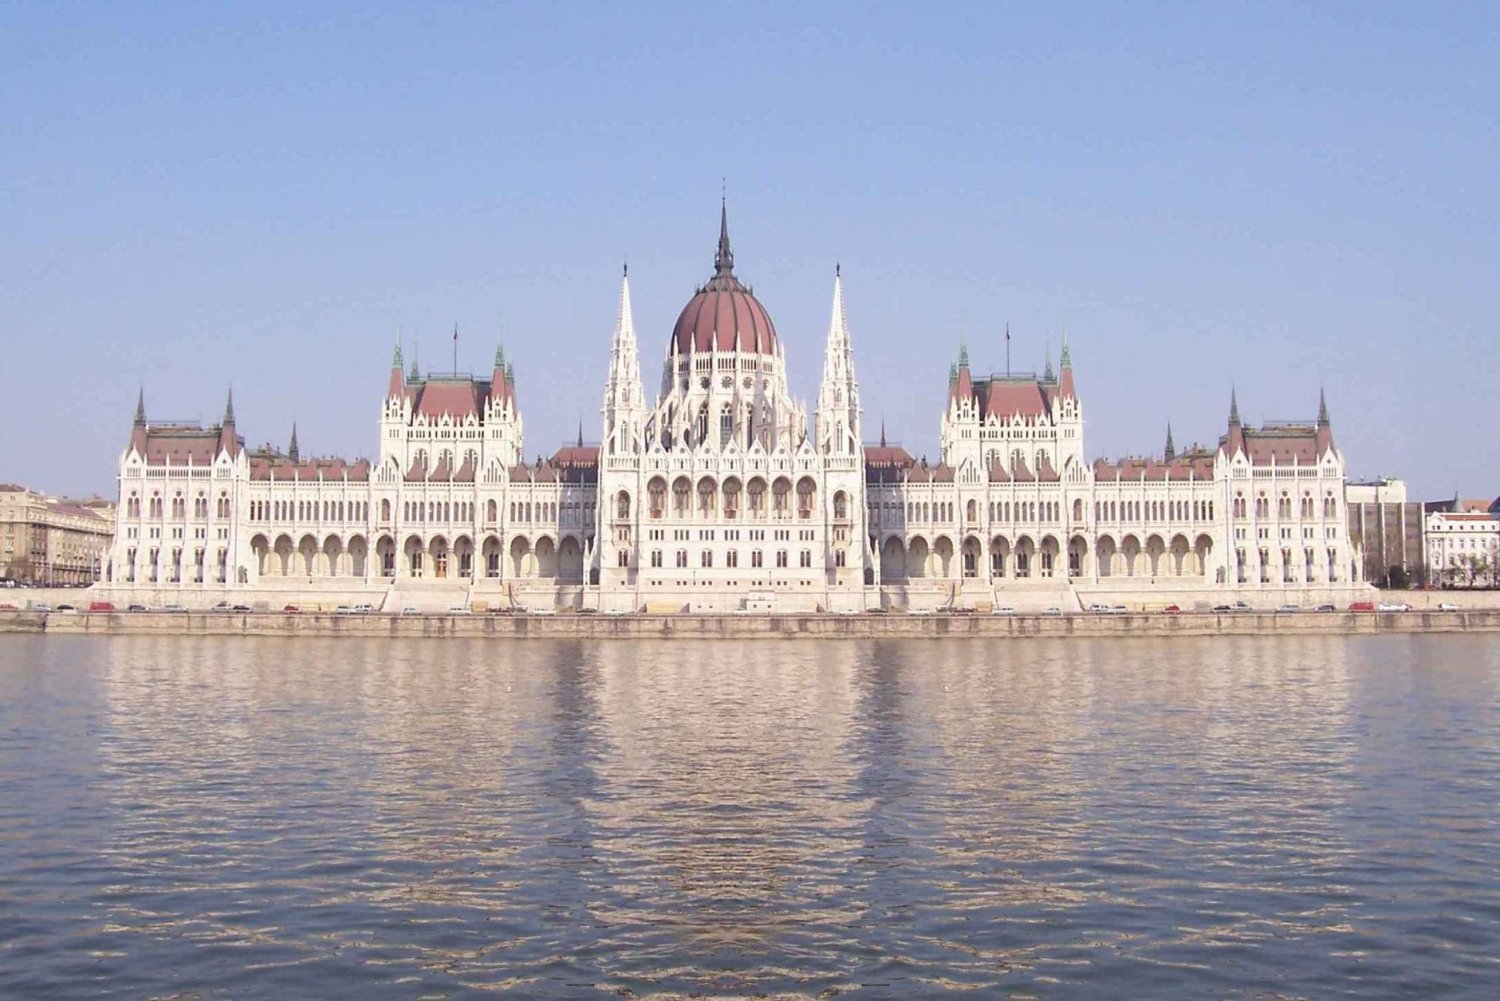 4-hour private Budapest city tour by public transportation